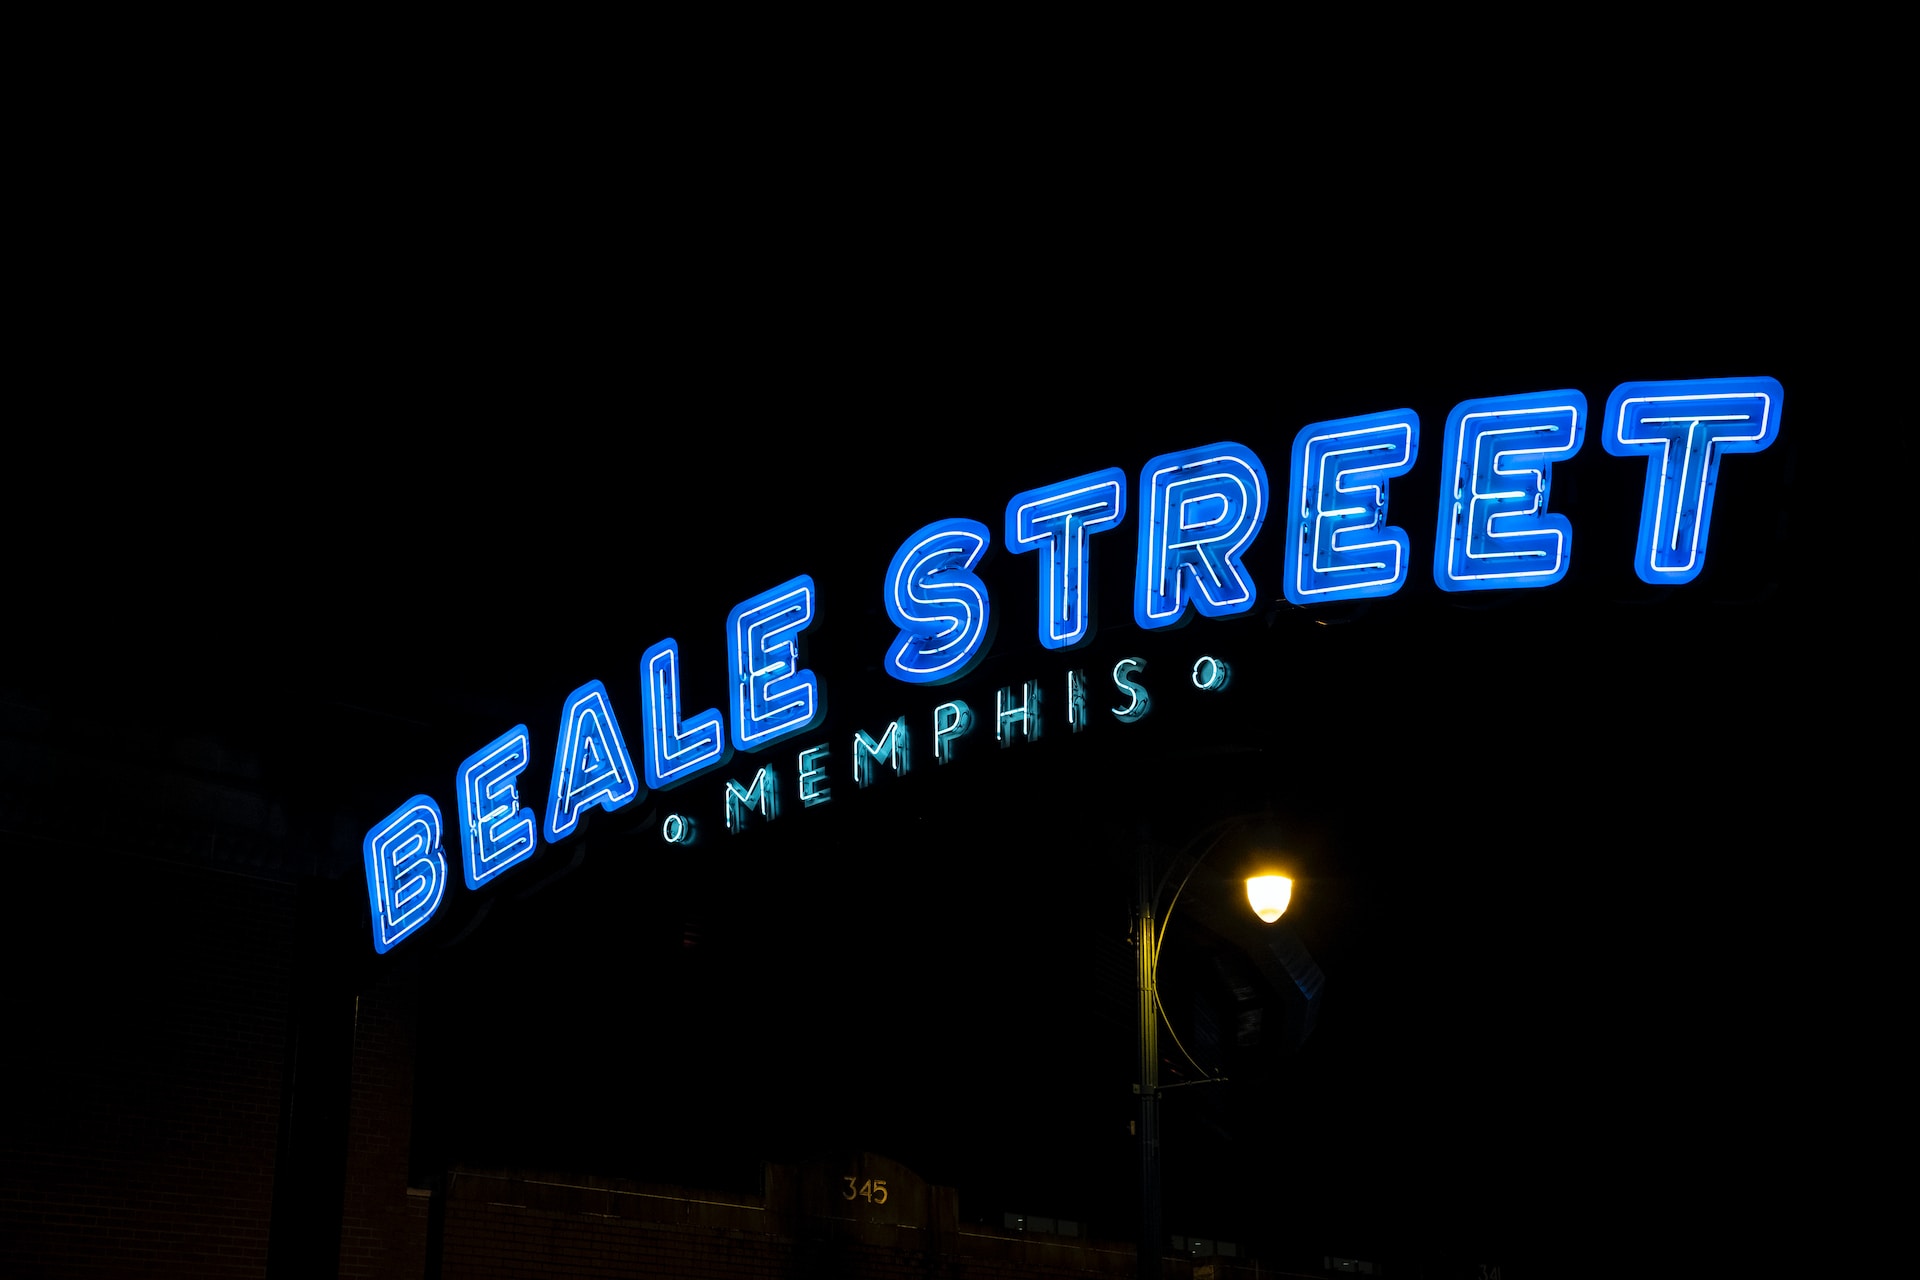 Beale Street neon sign